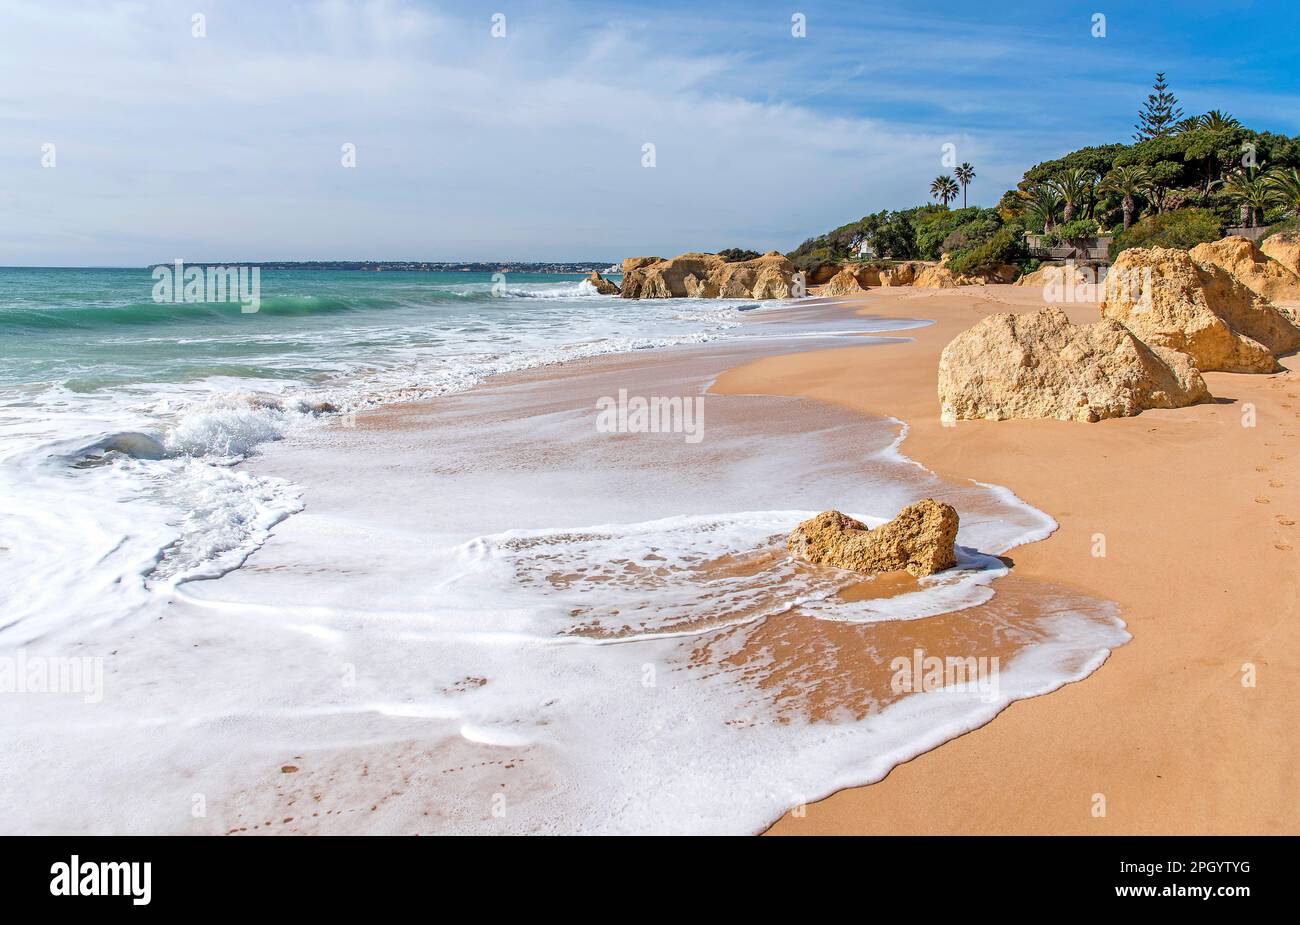 Atlantic waves roll ashore at deserted Praia da Galé beach near Albufeira, Algarve Portugal Stock Photo